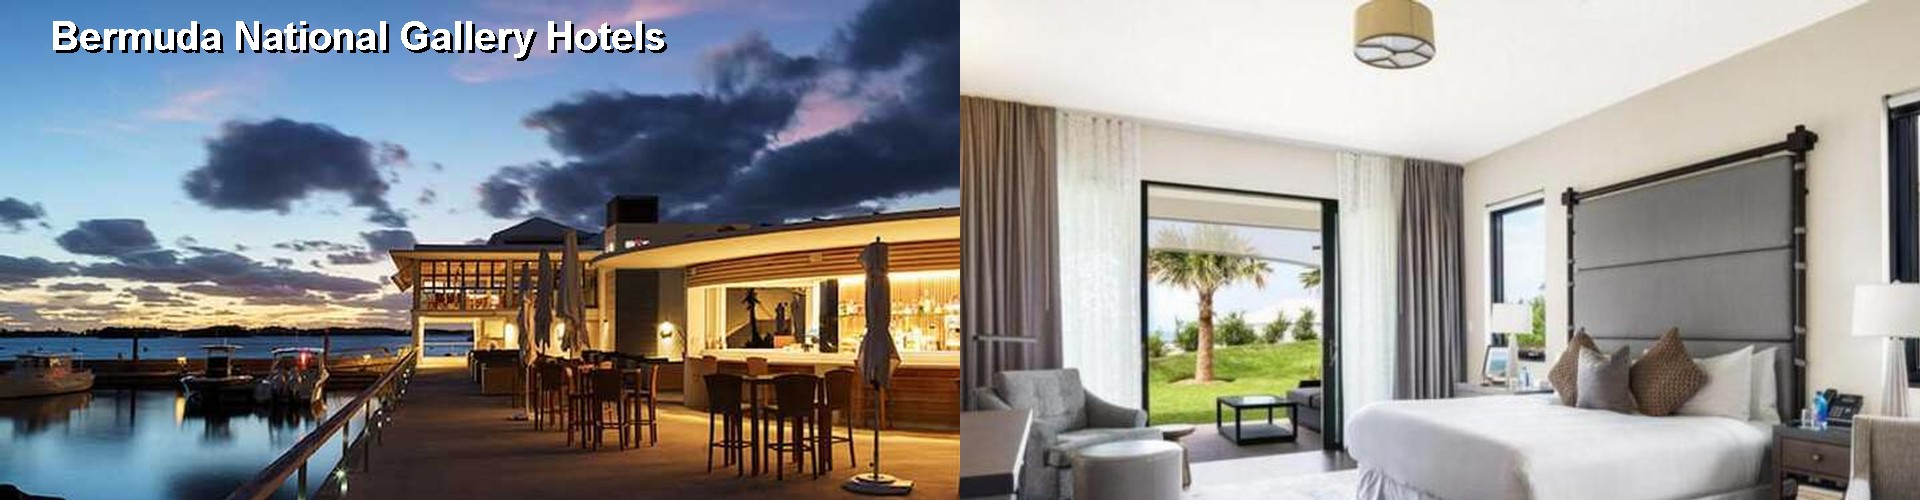 5 Best Hotels near Bermuda National Gallery